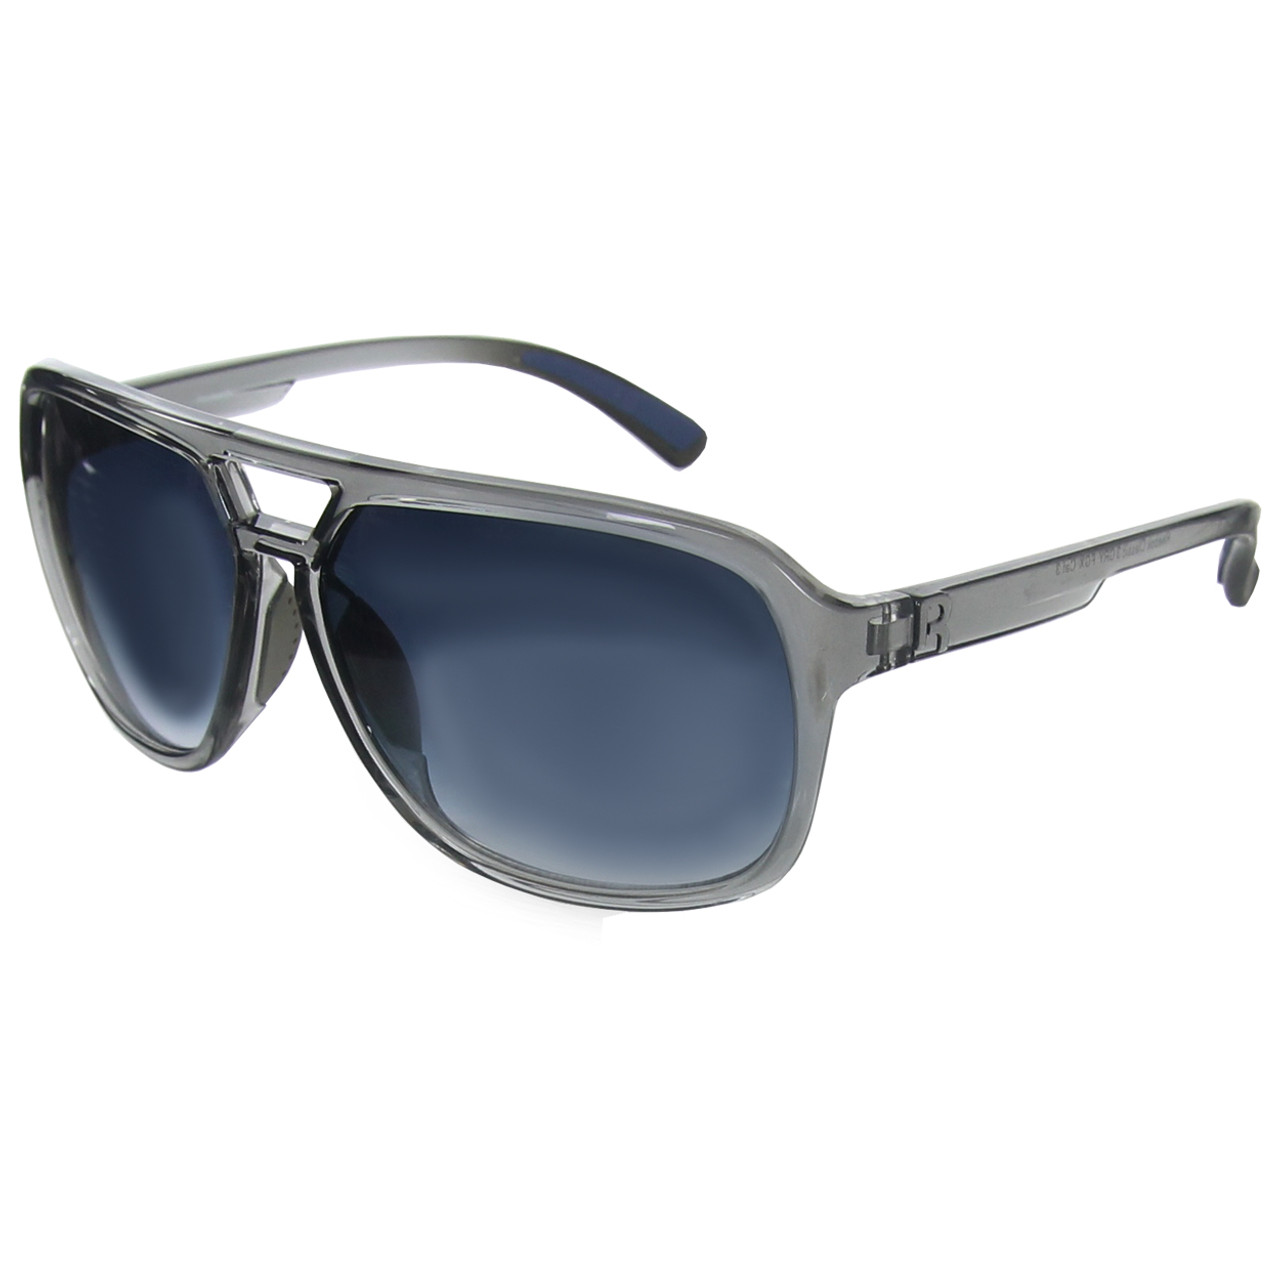 Reebok Golf Classic 3 Sunglasses 